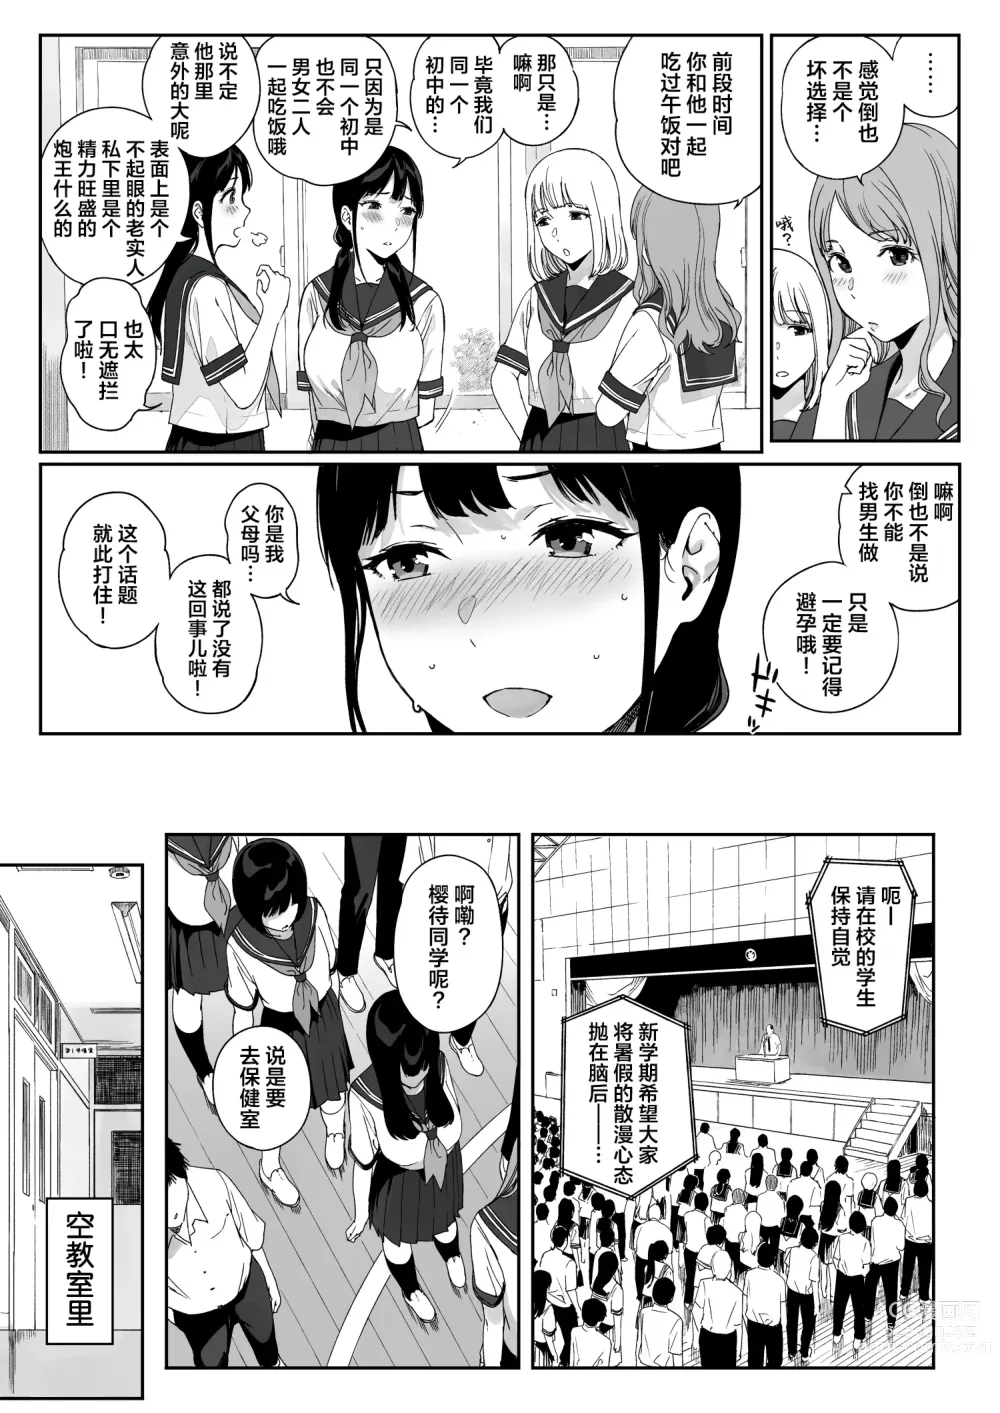 Page 6 of doujinshi 与魅魔的同居生活11